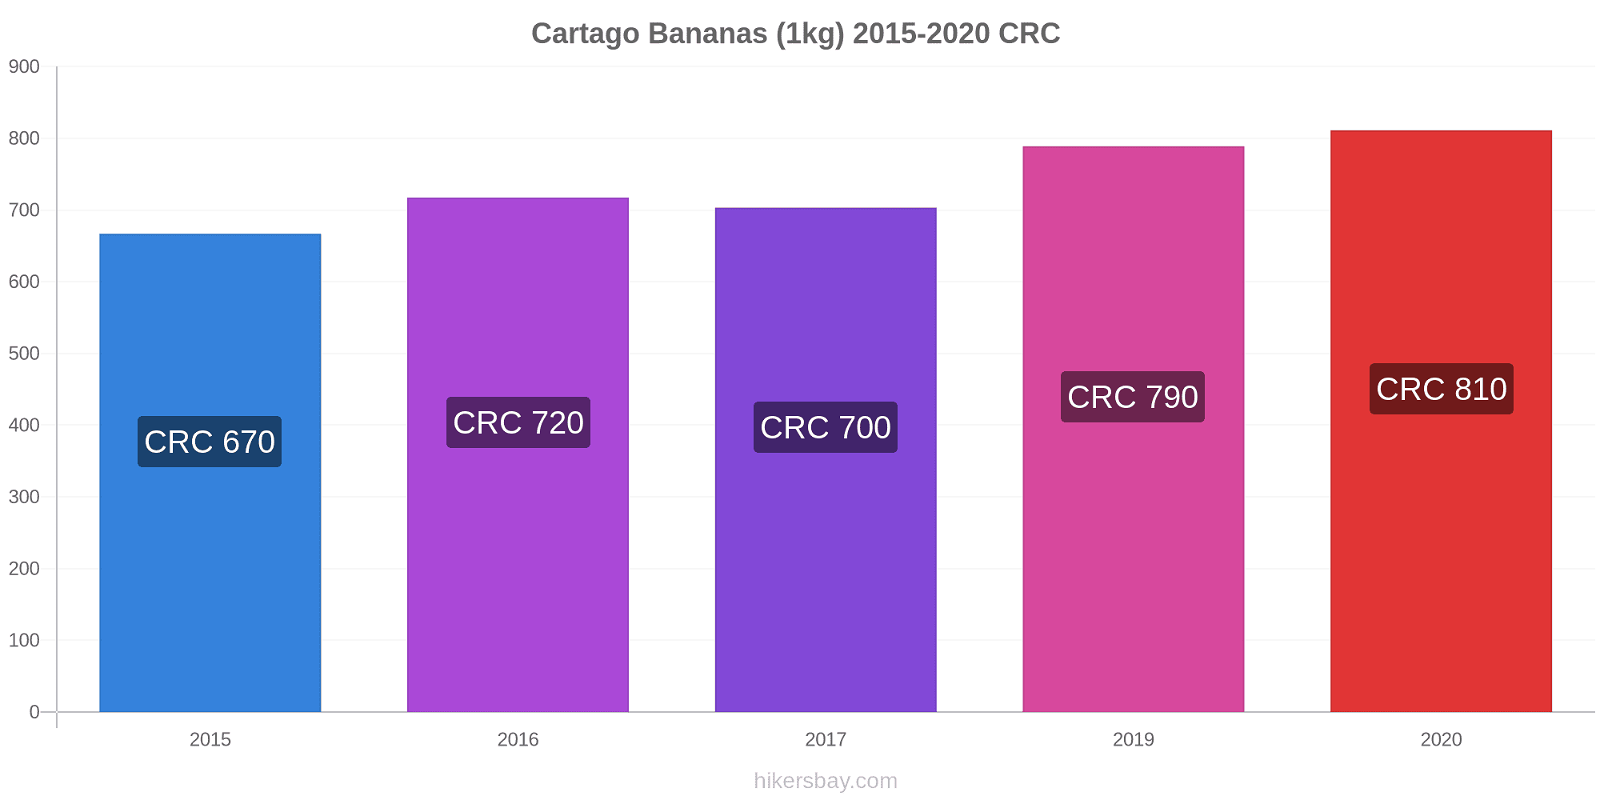 Cartago price changes Bananas (1kg) hikersbay.com